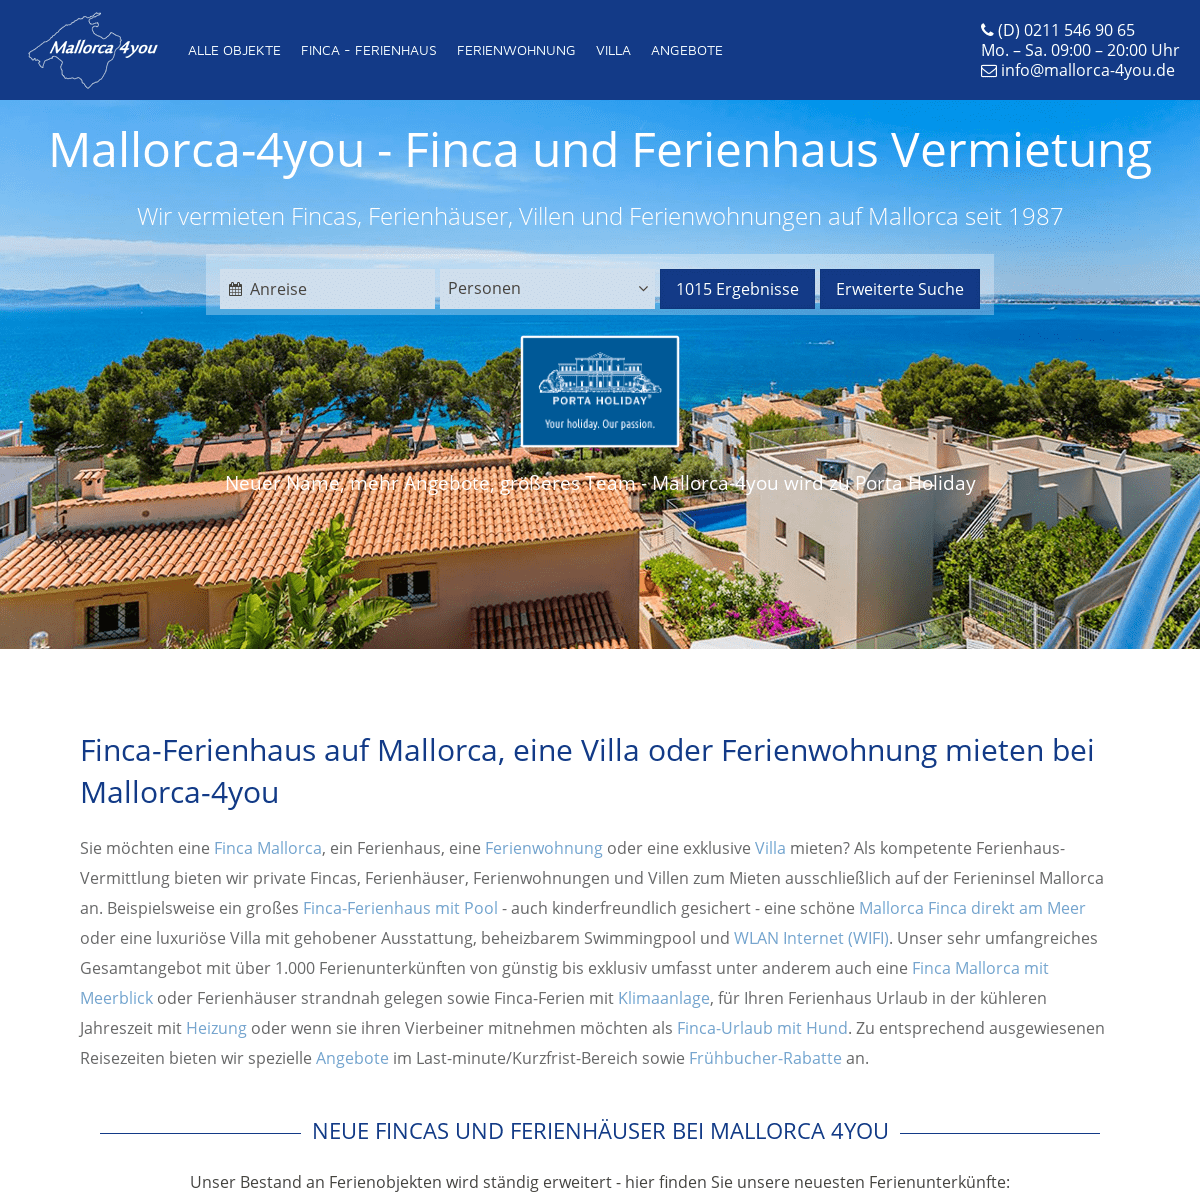 Finca Mallorca | Fincas und Ferienhäuser privat mieten für 2019/2020